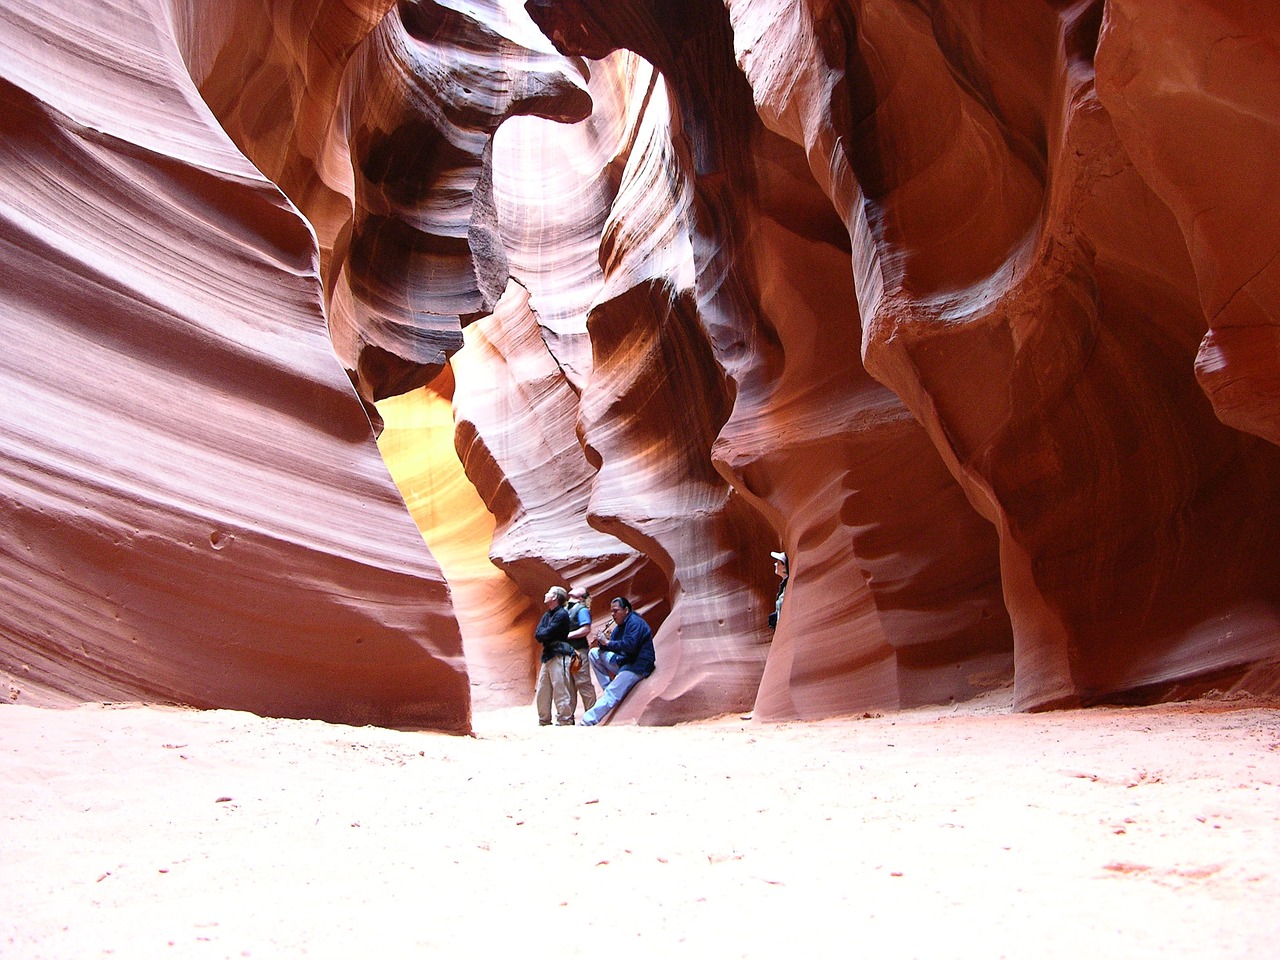 slot canyon antelope canyon sandstone free photo